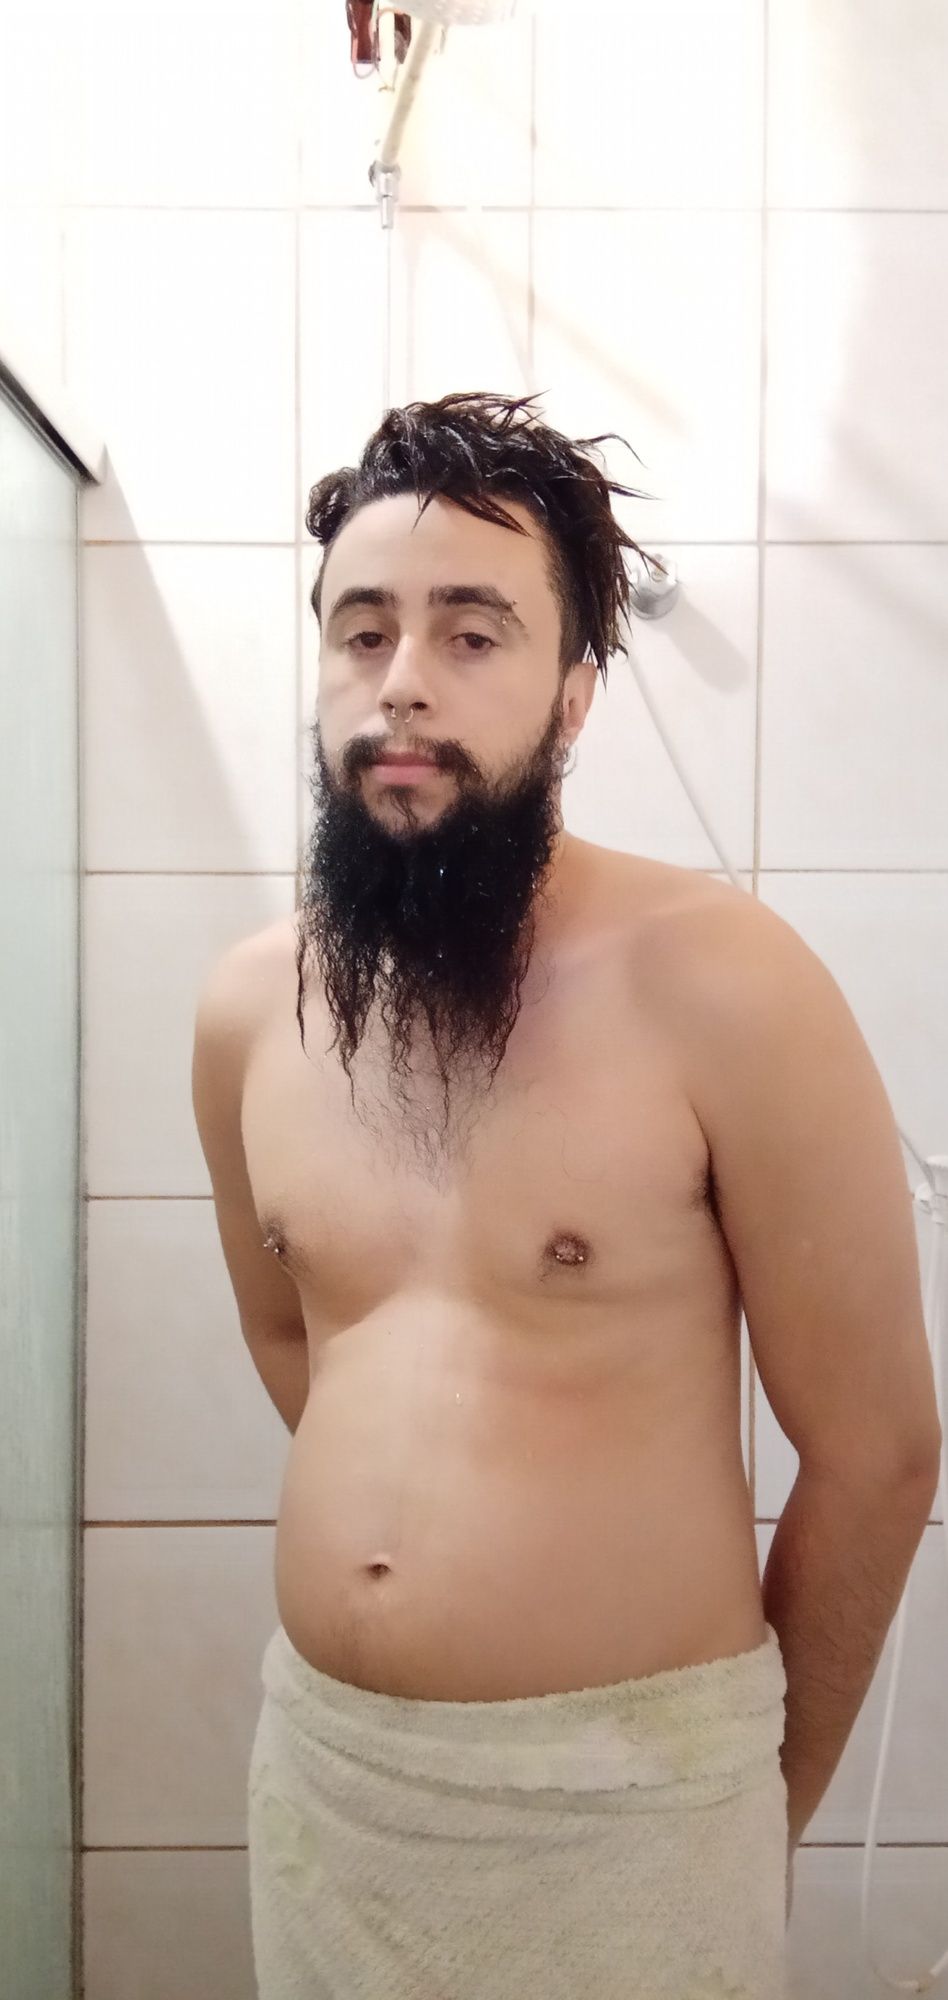 Shower #8